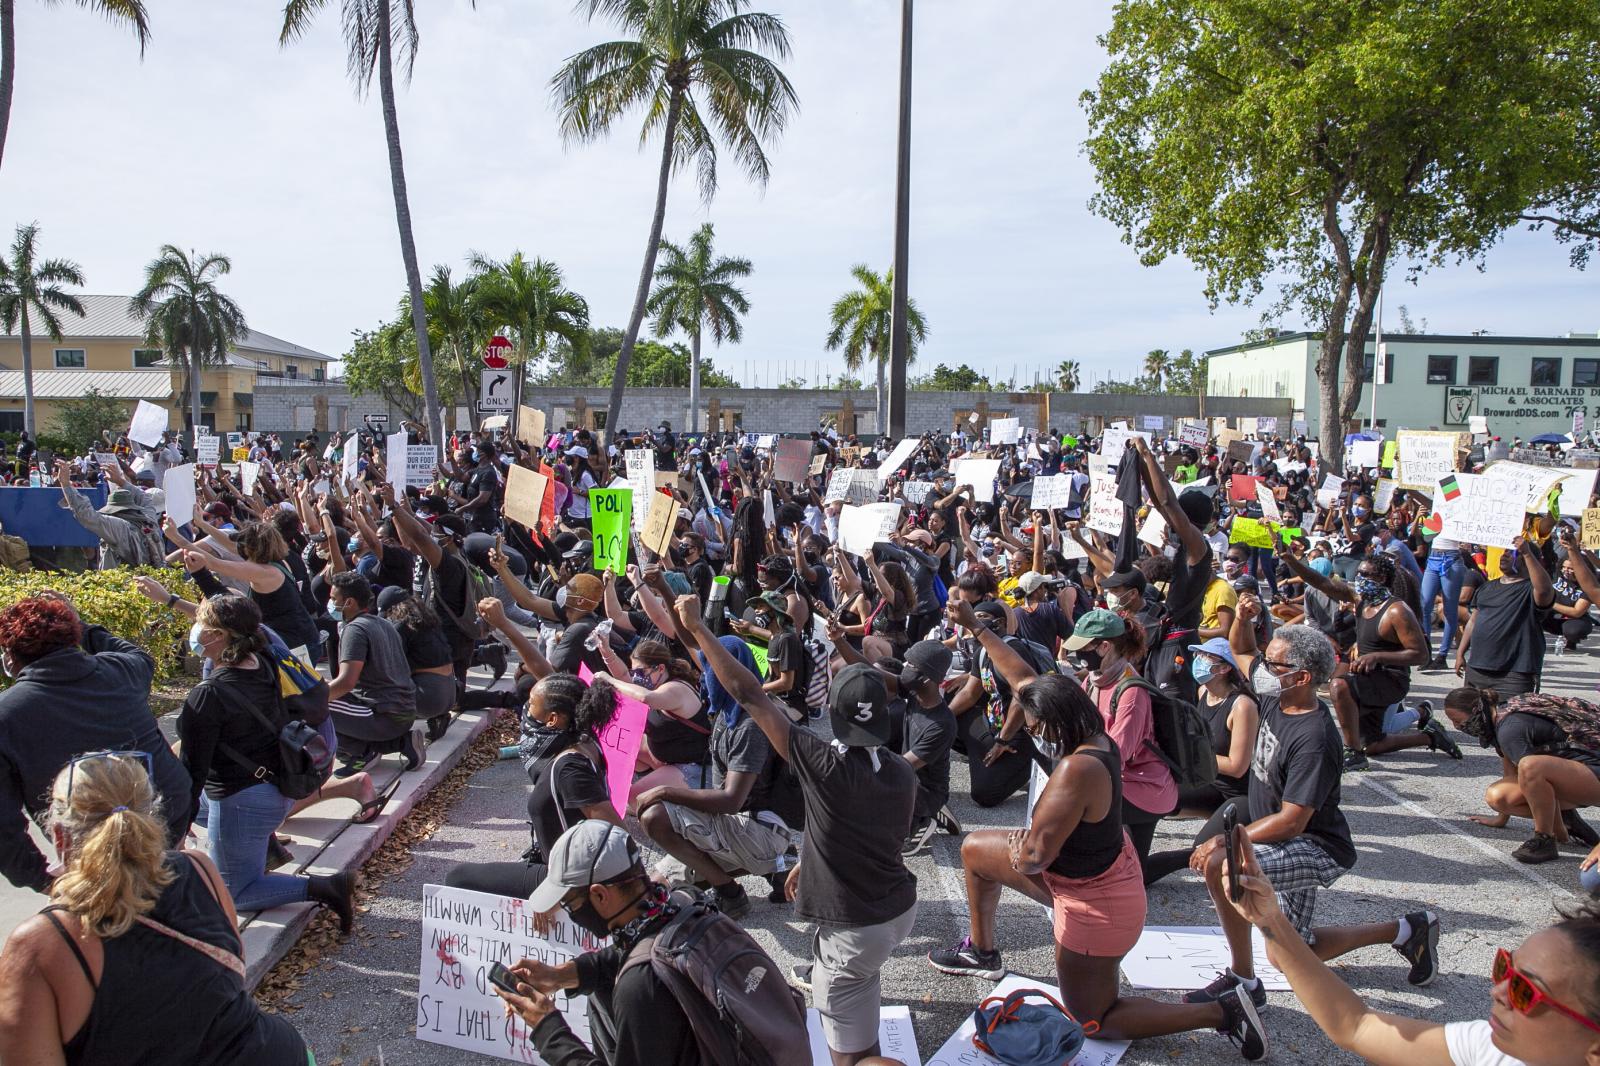 George Floyd Ft. Lauderdale Protest